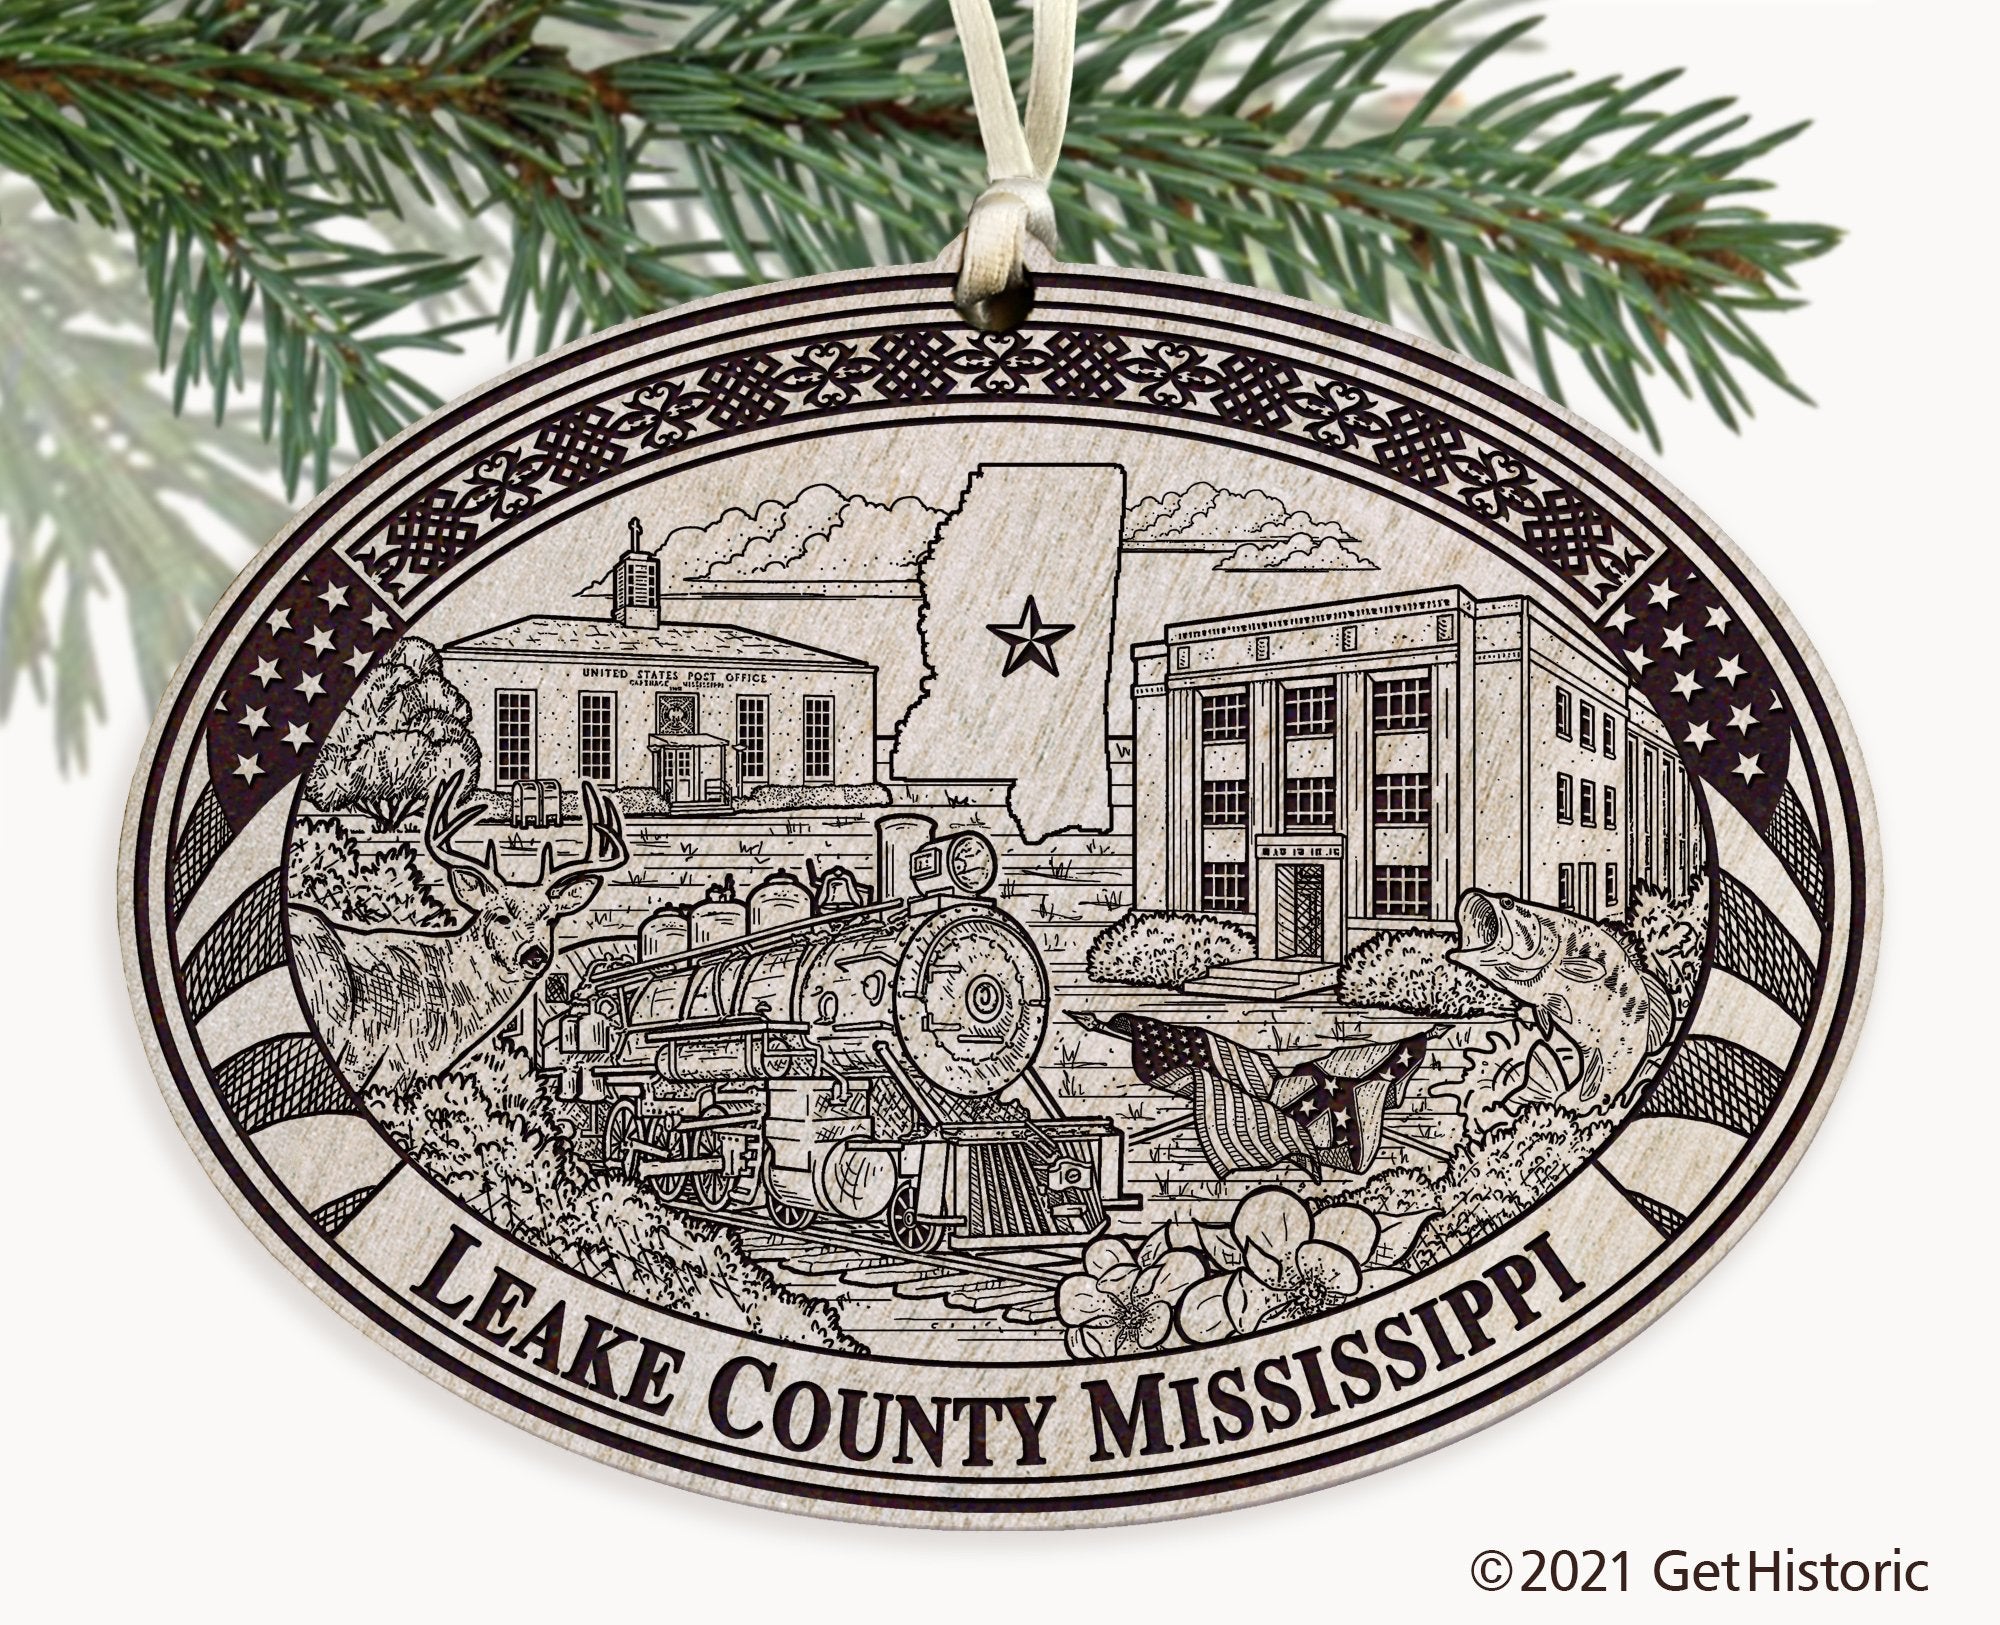 Leake County Mississippi Engraved Ornament